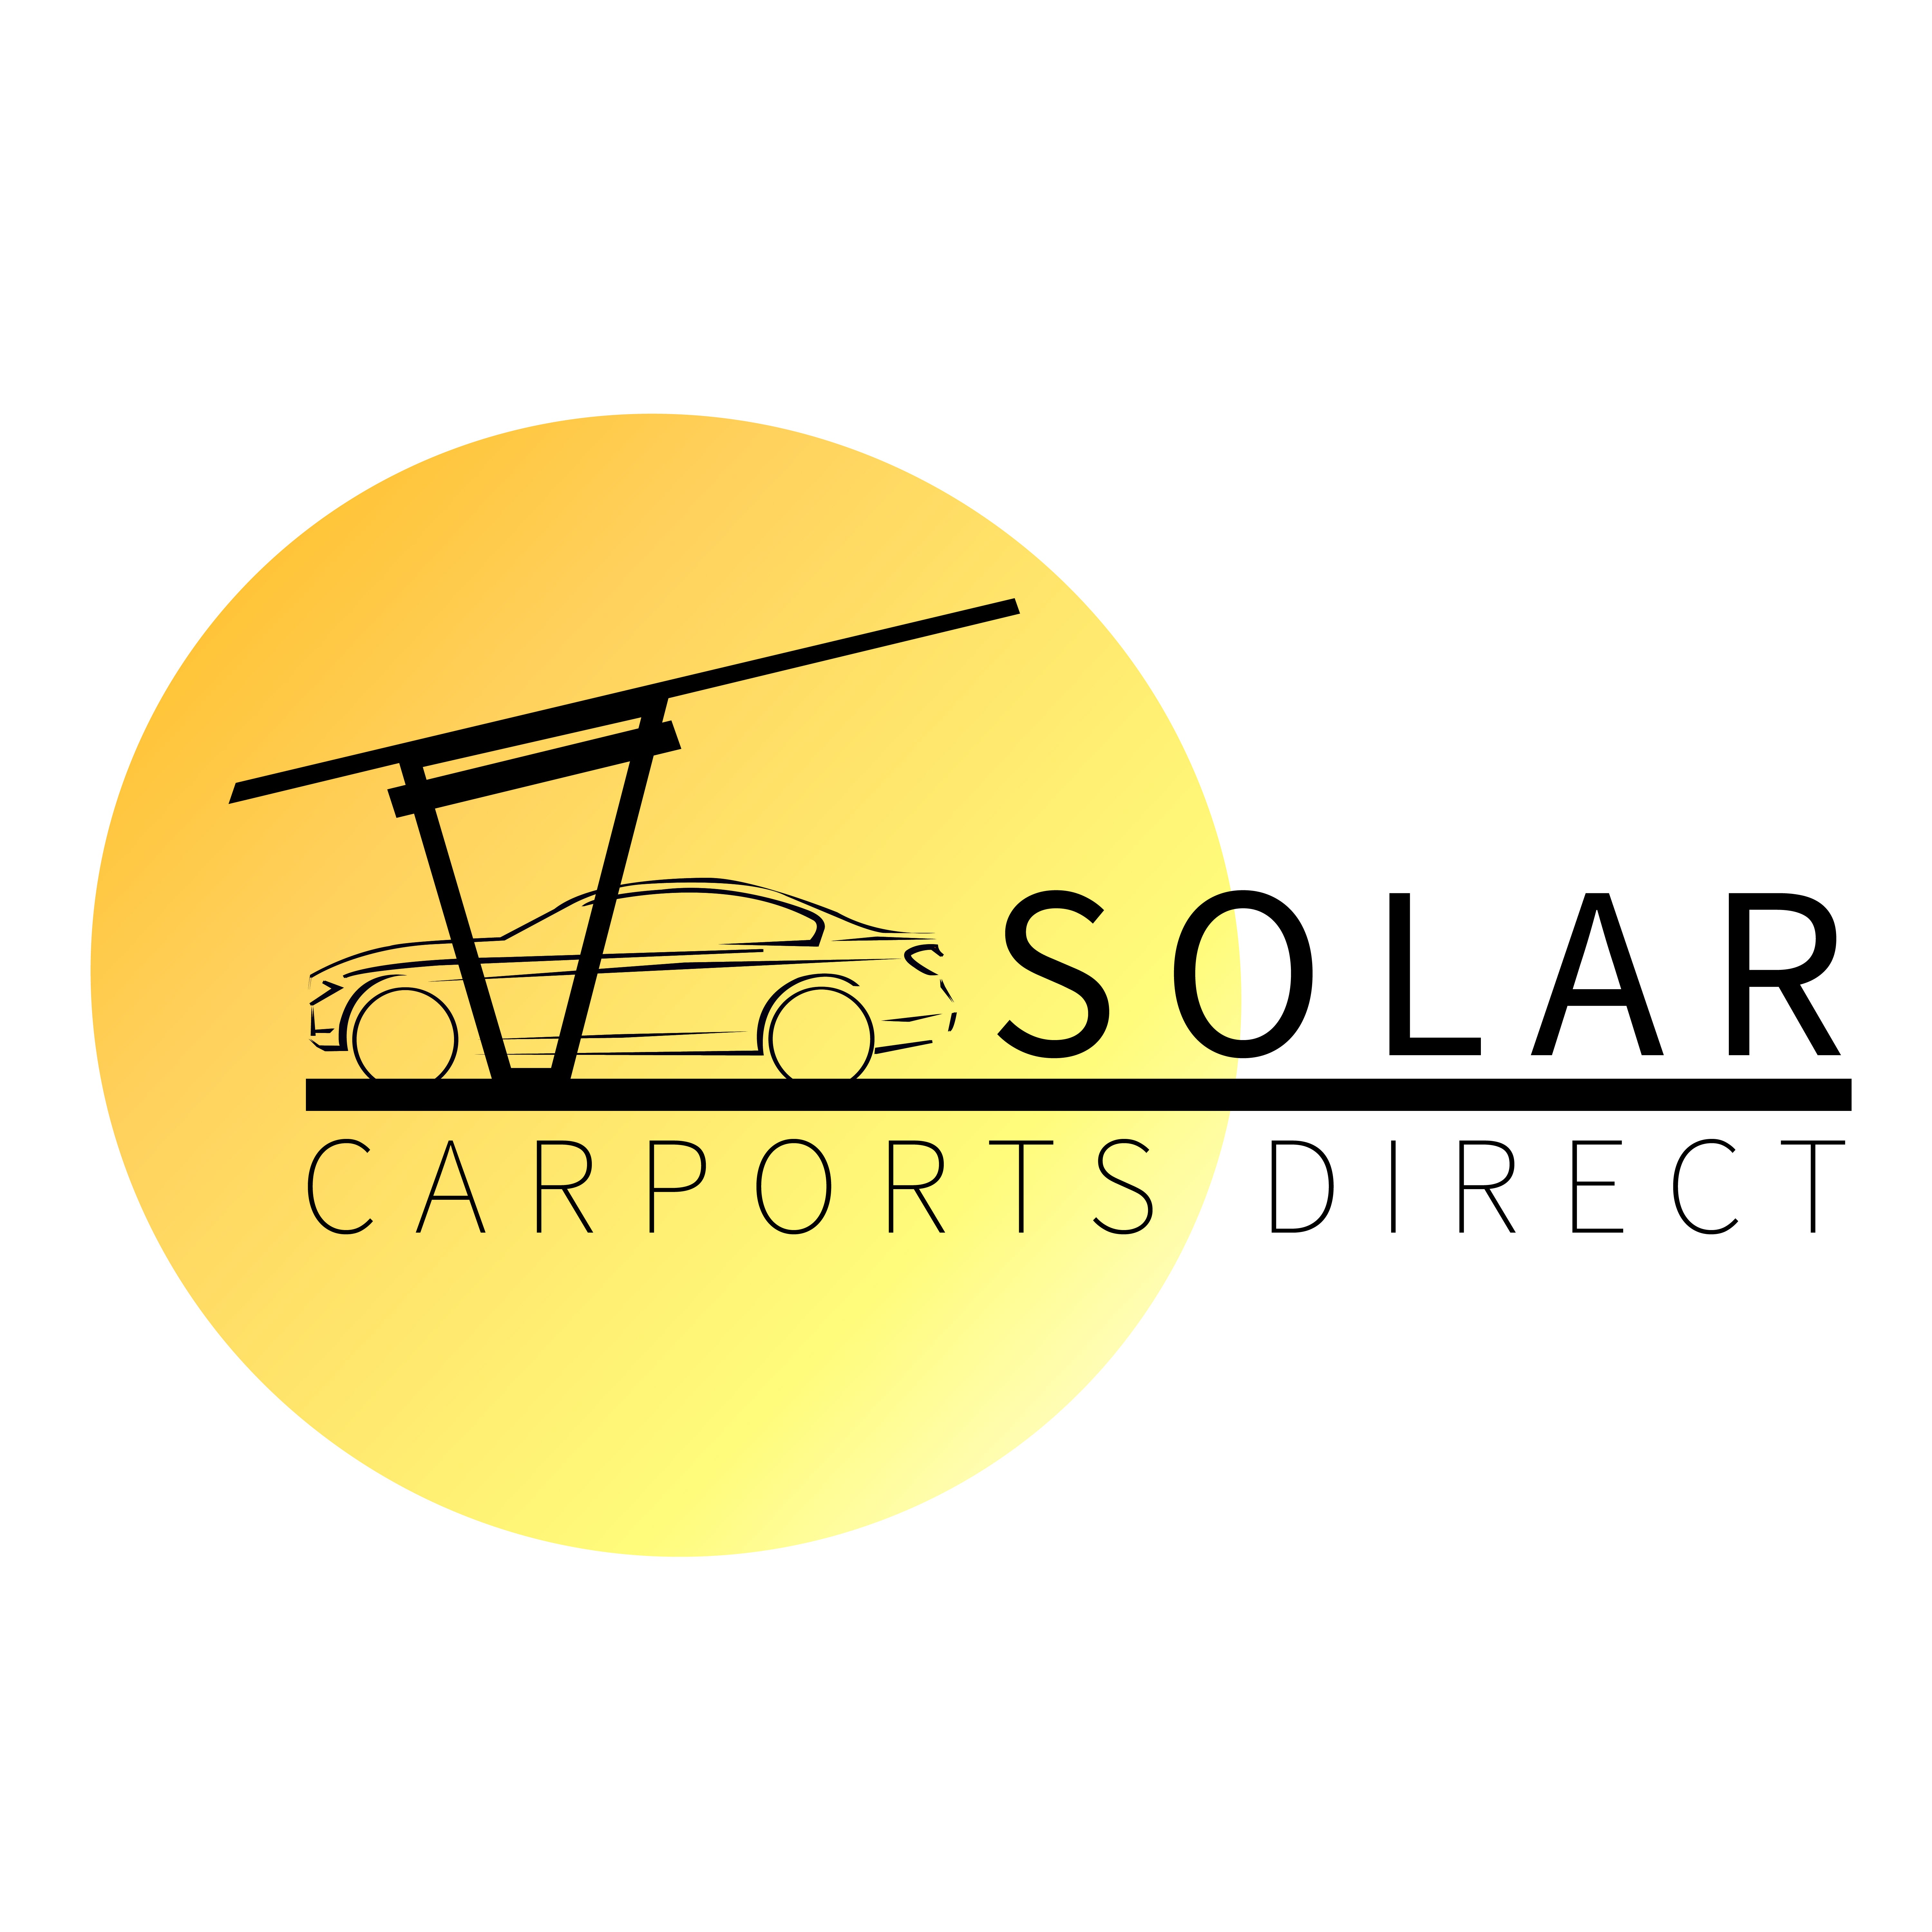 Solar Carports Direct logo